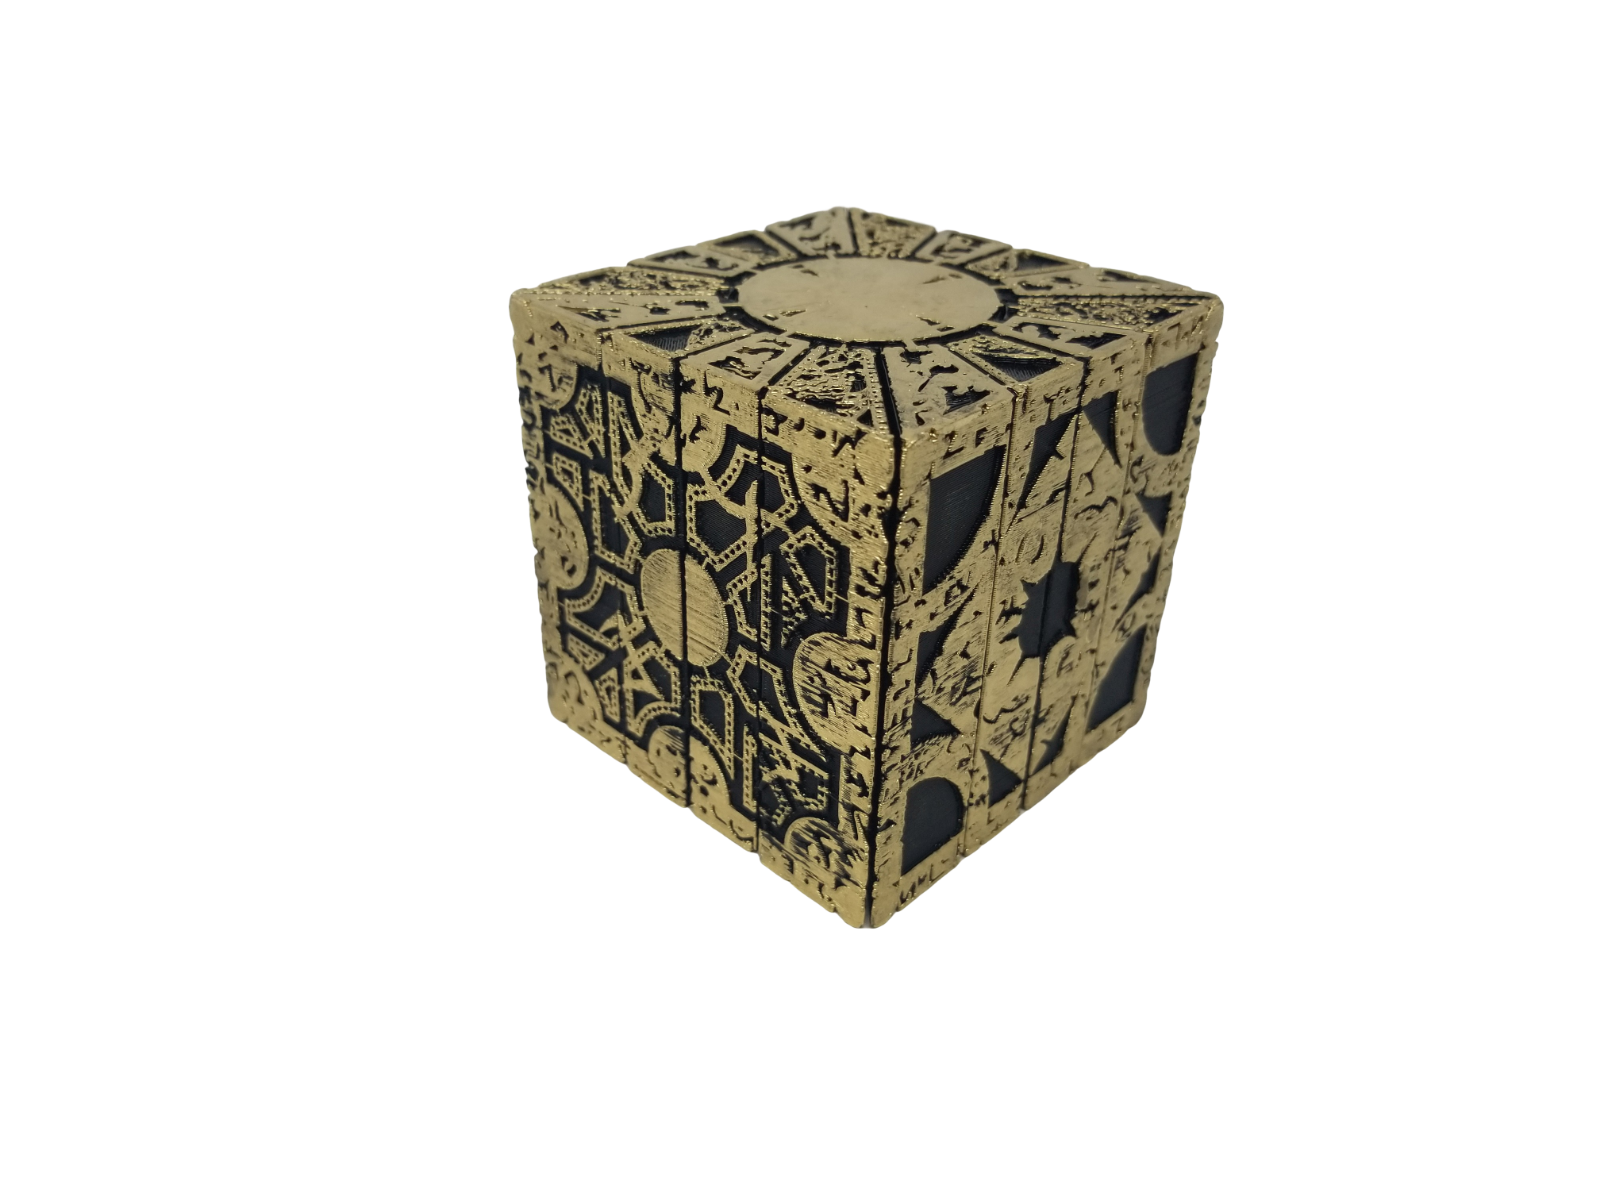 Hellraiser Cube Puzzle Box Lament Configuration  Functional Pinhead Prop Horror